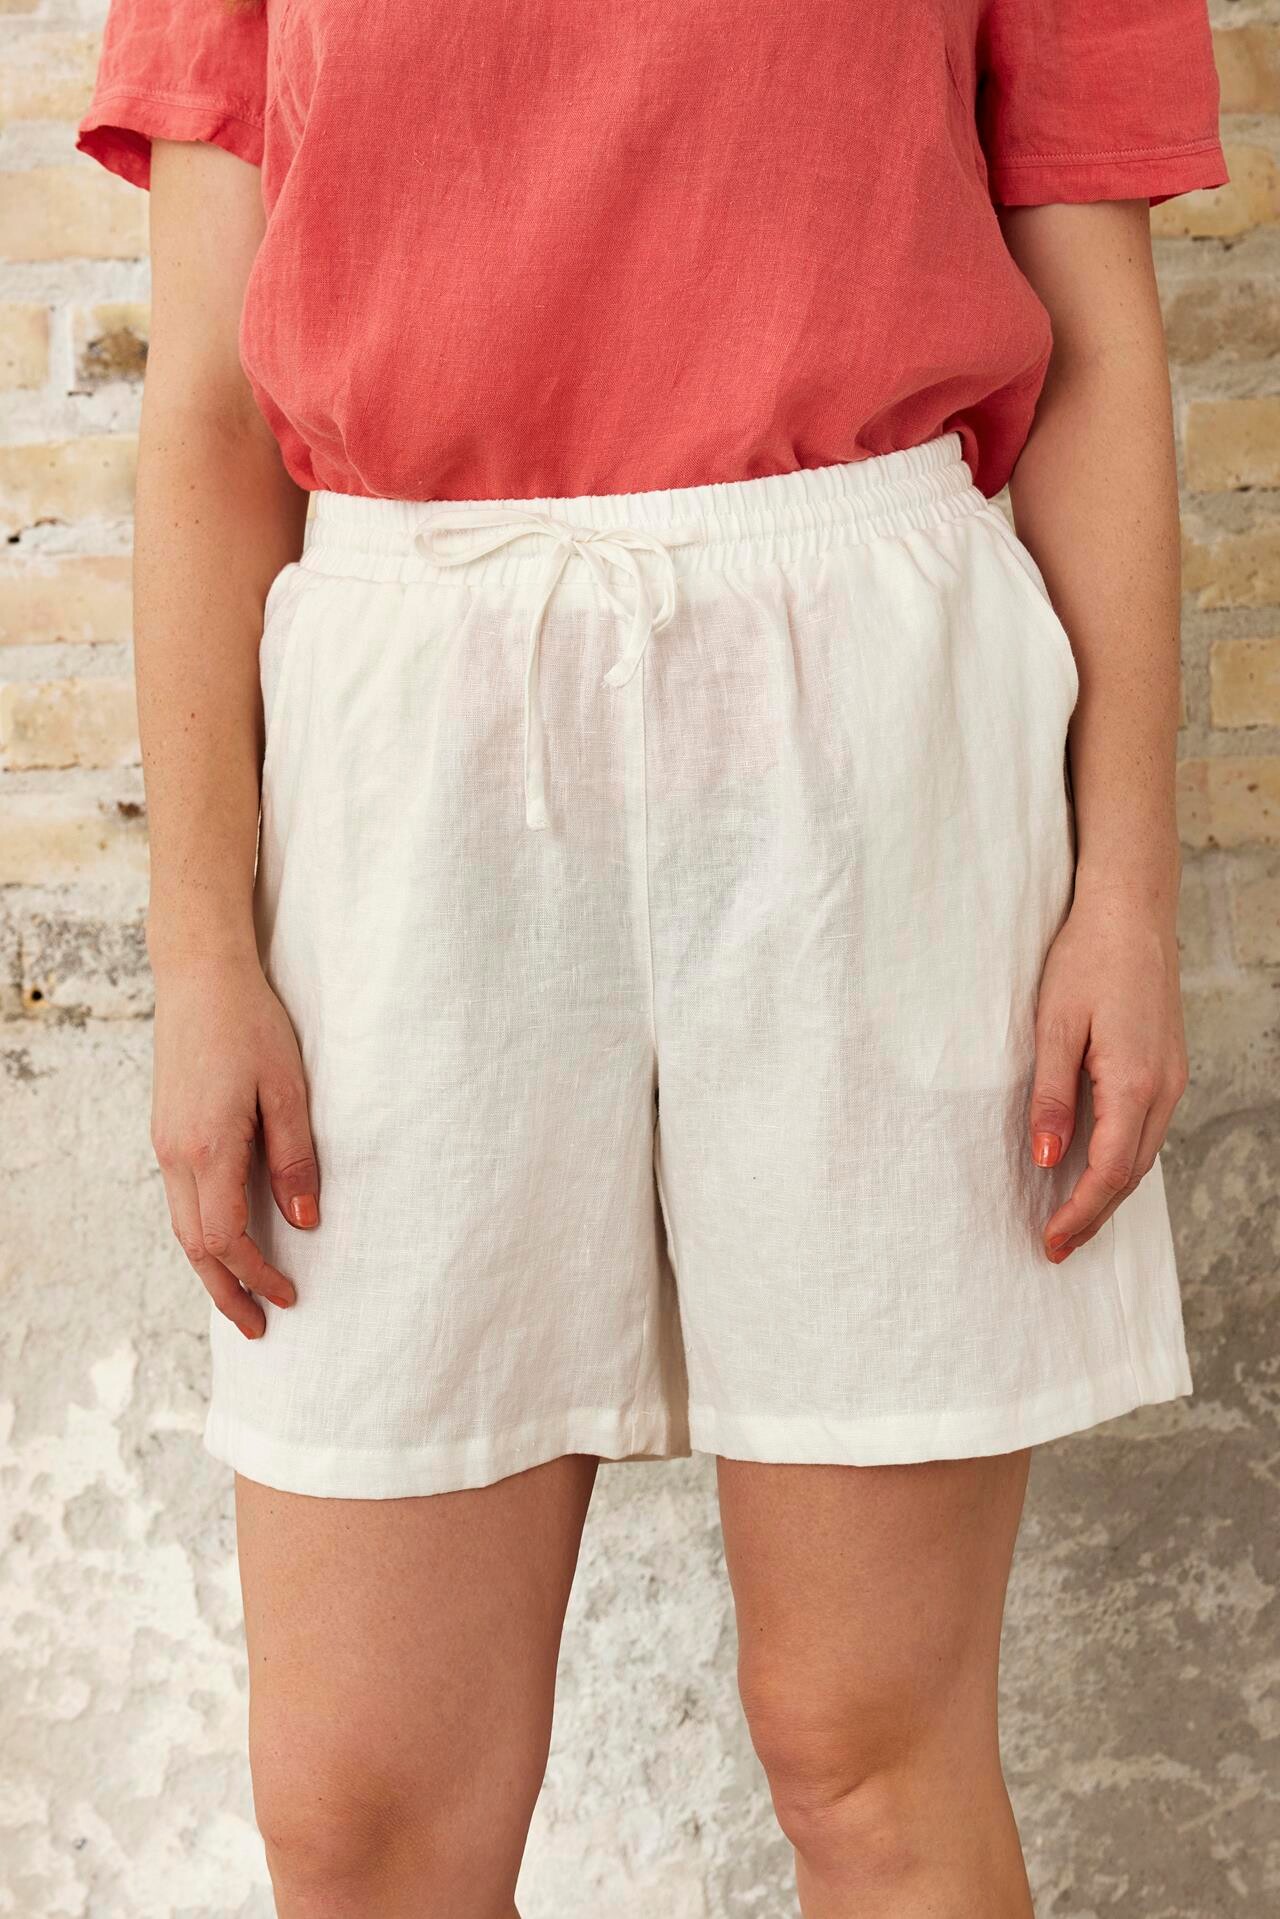 Se IN FRONT Linea Shorts, Farve: Off White, Størrelse: S, Dame hos Infront Women